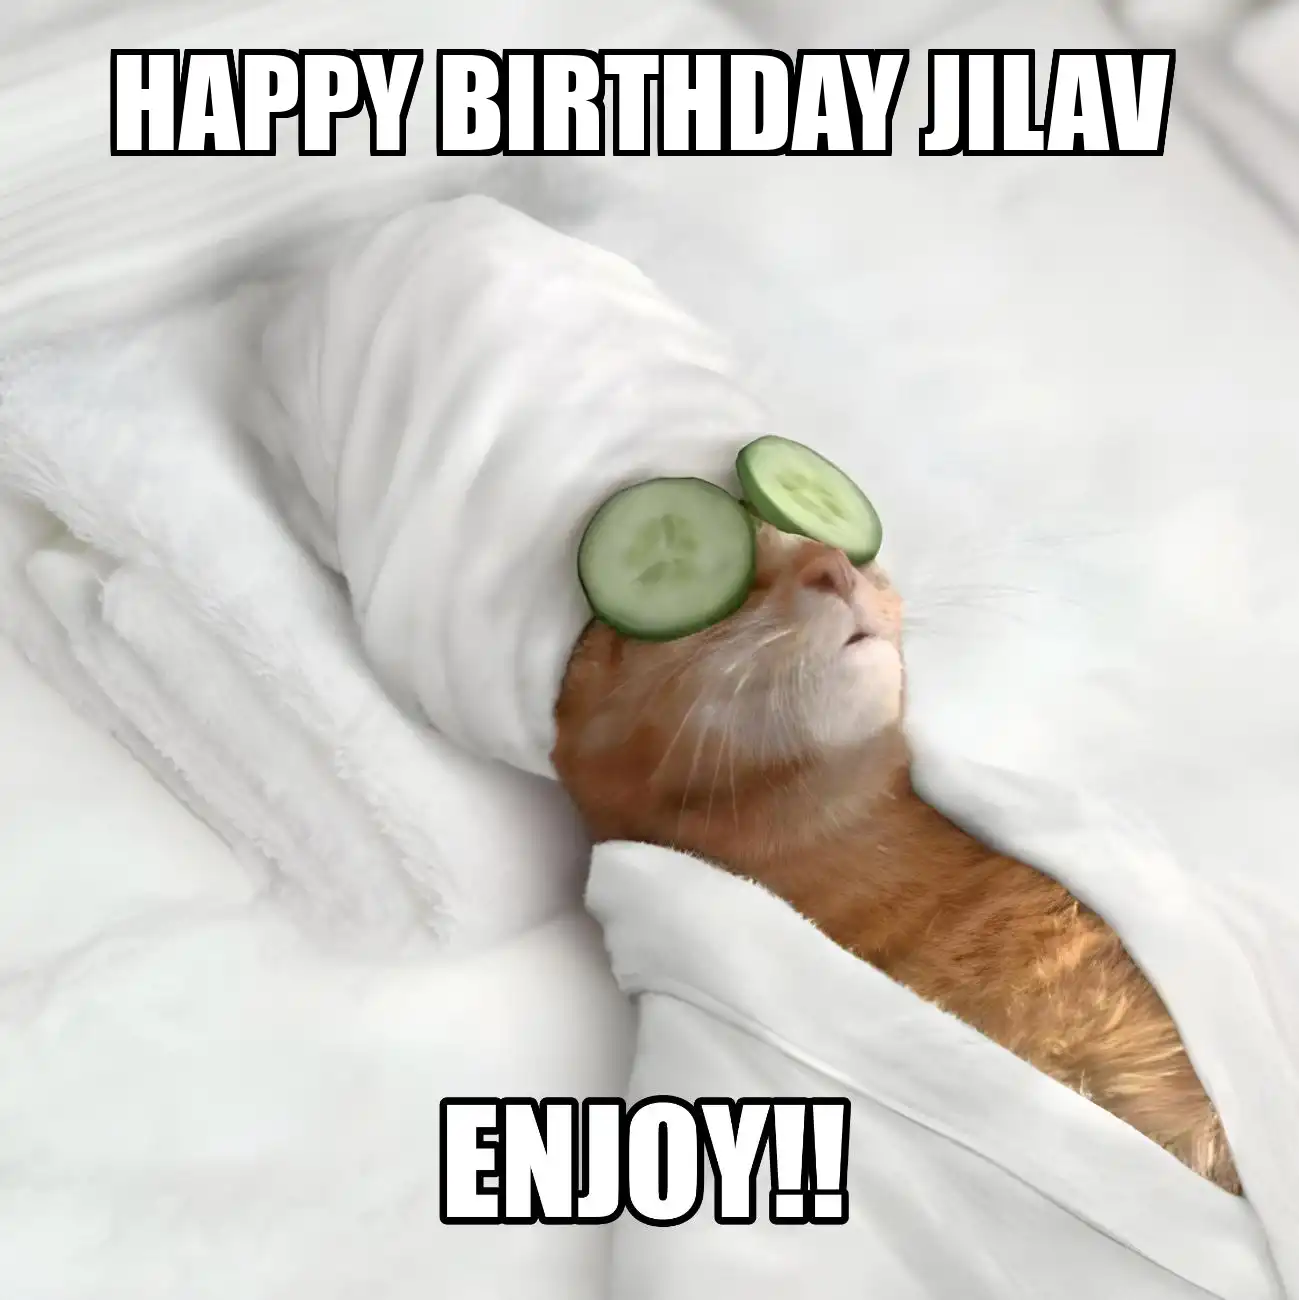 Happy Birthday Jilav Enjoy Cat Meme